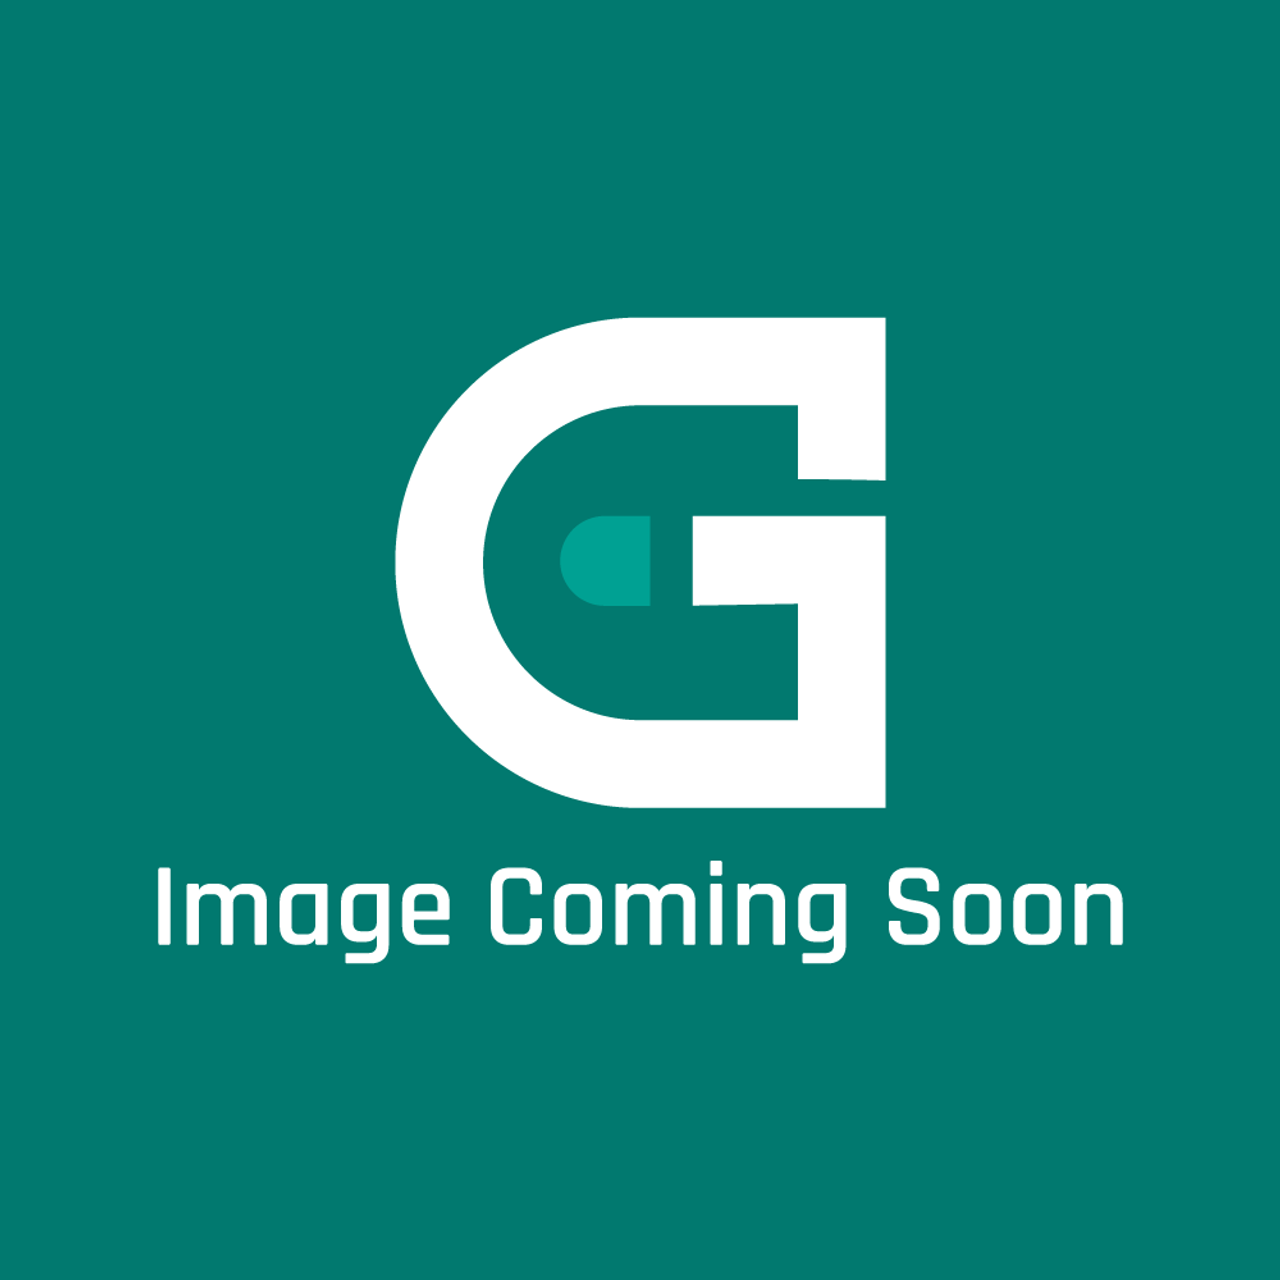 GE Appliances WB44X48677 - Hidden Bake Element 1700W - Image Coming Soon!